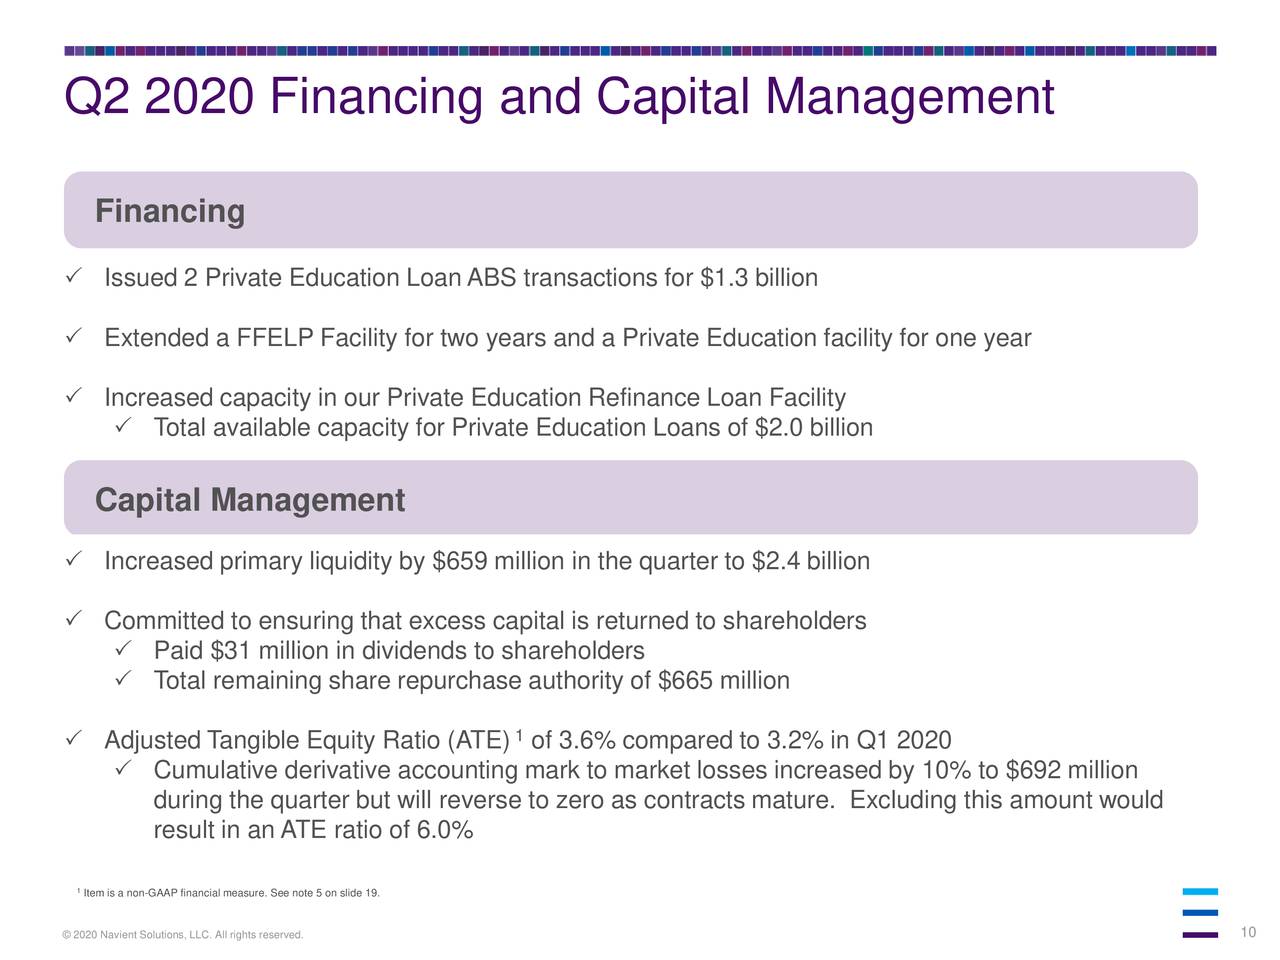 Q2 2020 Financing and Capital Management